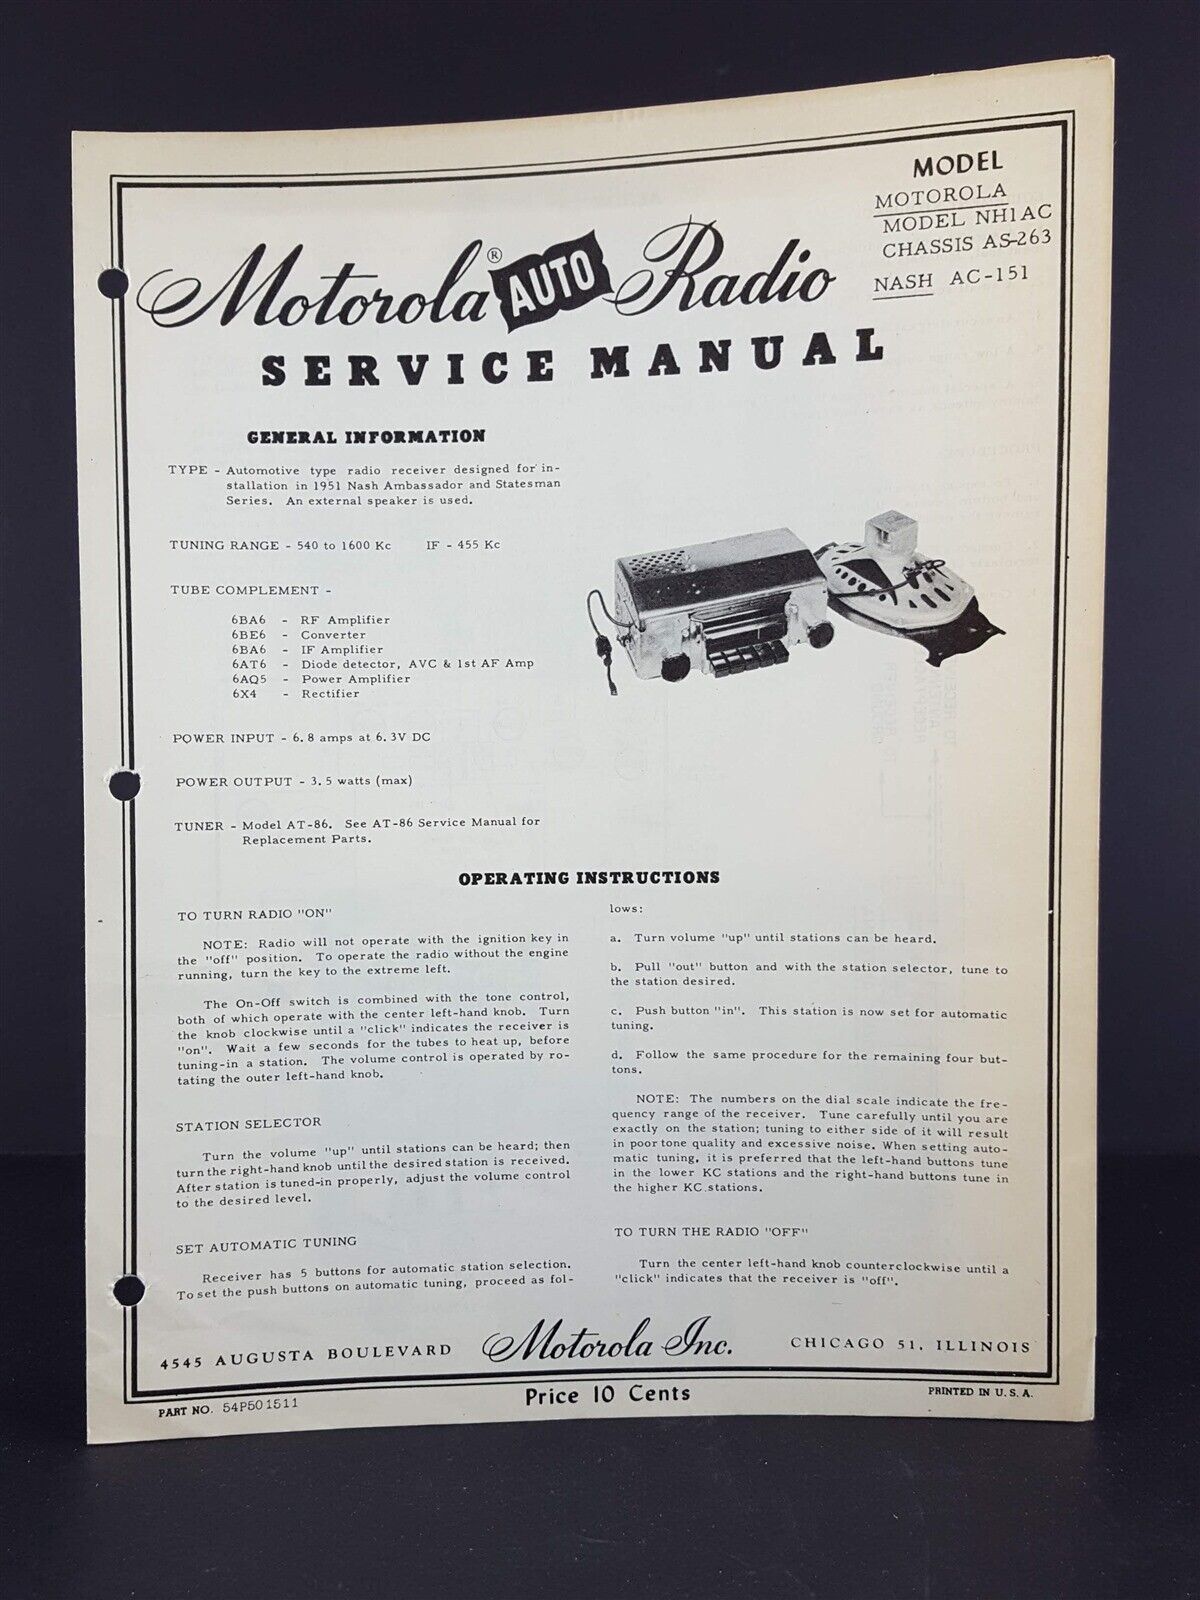 Motorola 1957 International IH Auto Radio Service Manual Model IL7TC